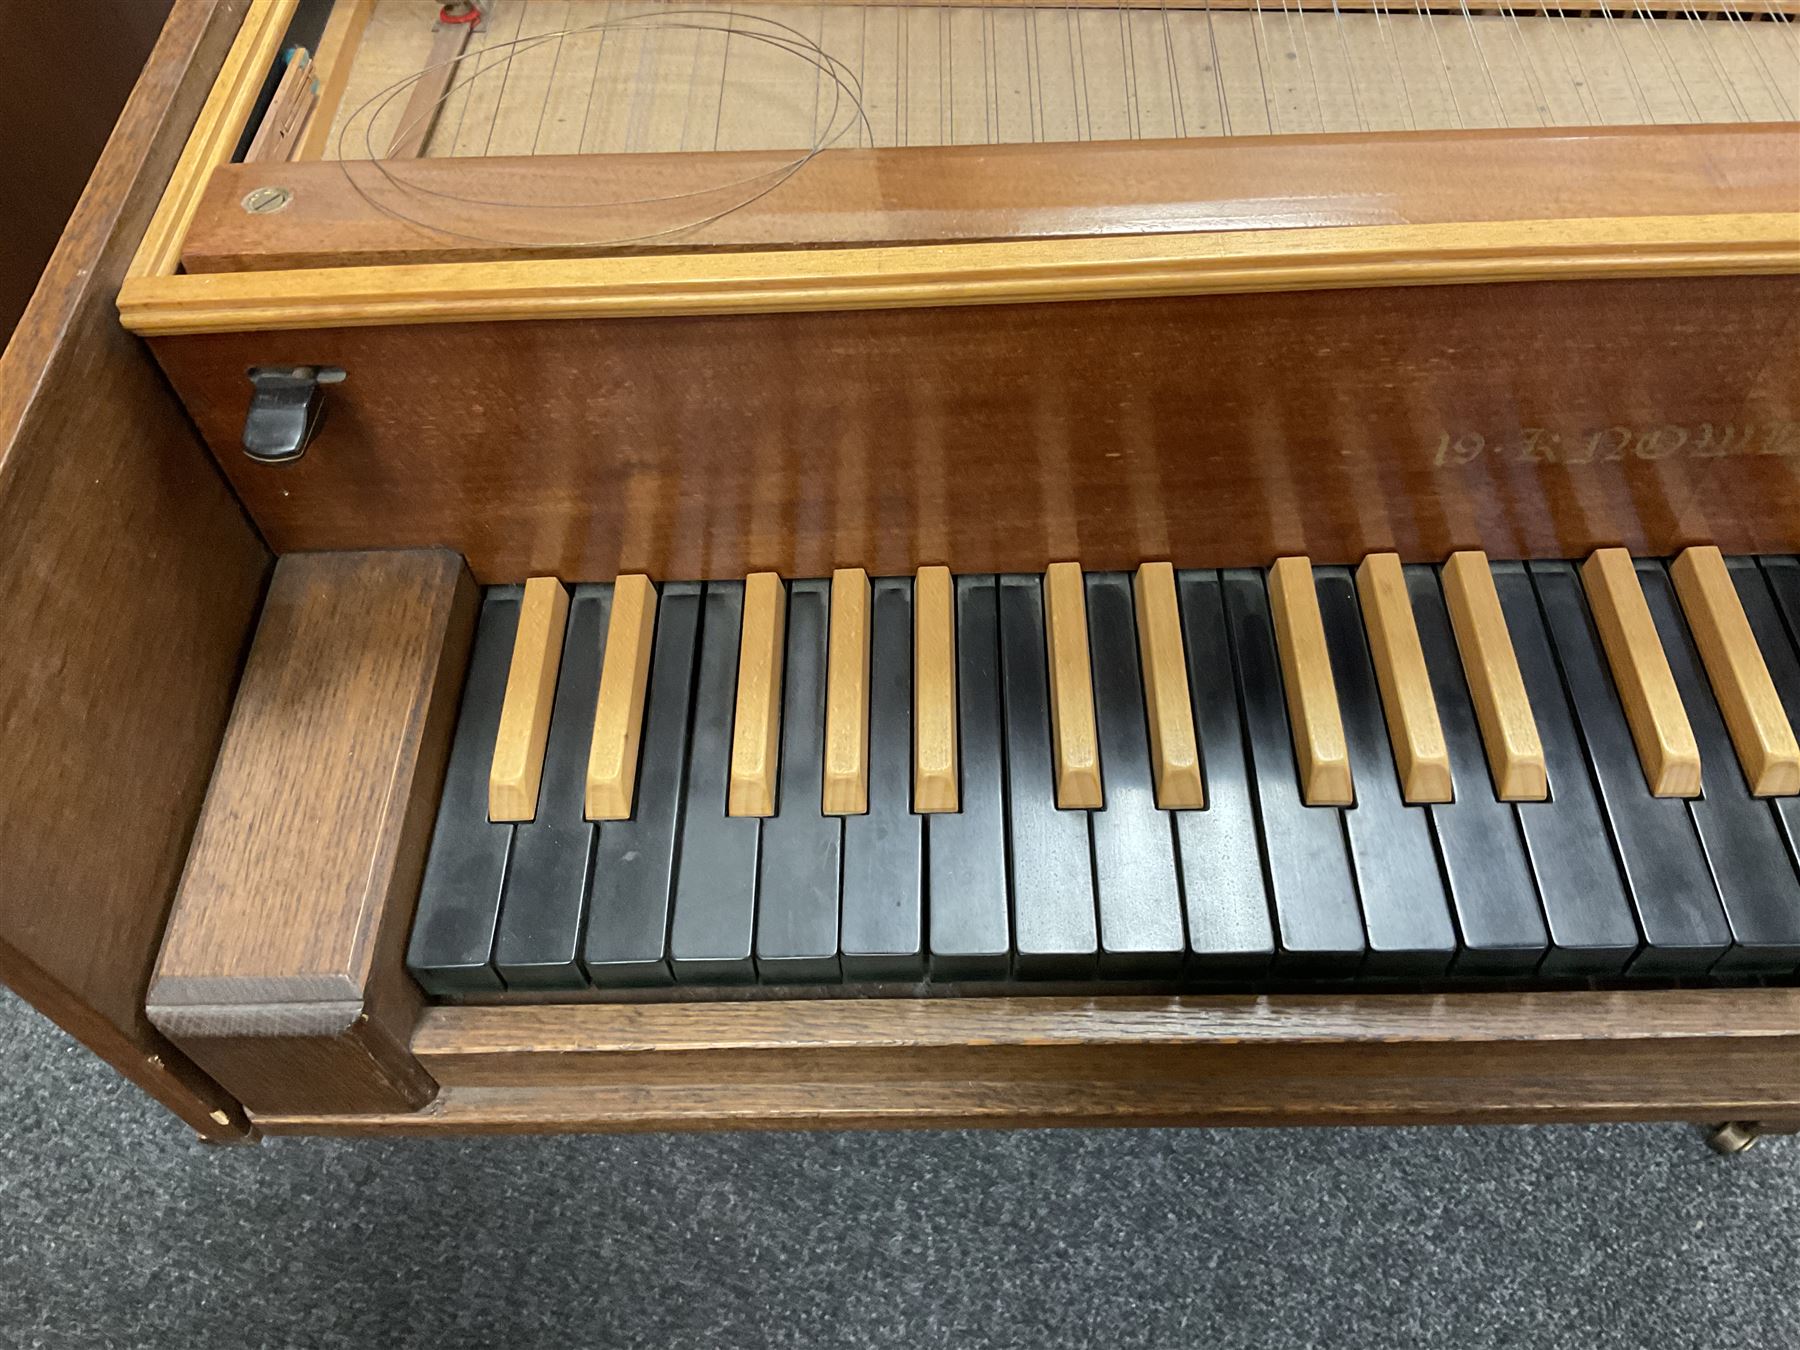 1970s Knowles oak cased harpsichord dated 1974 with 31-key ebonised keyboard - Image 4 of 12